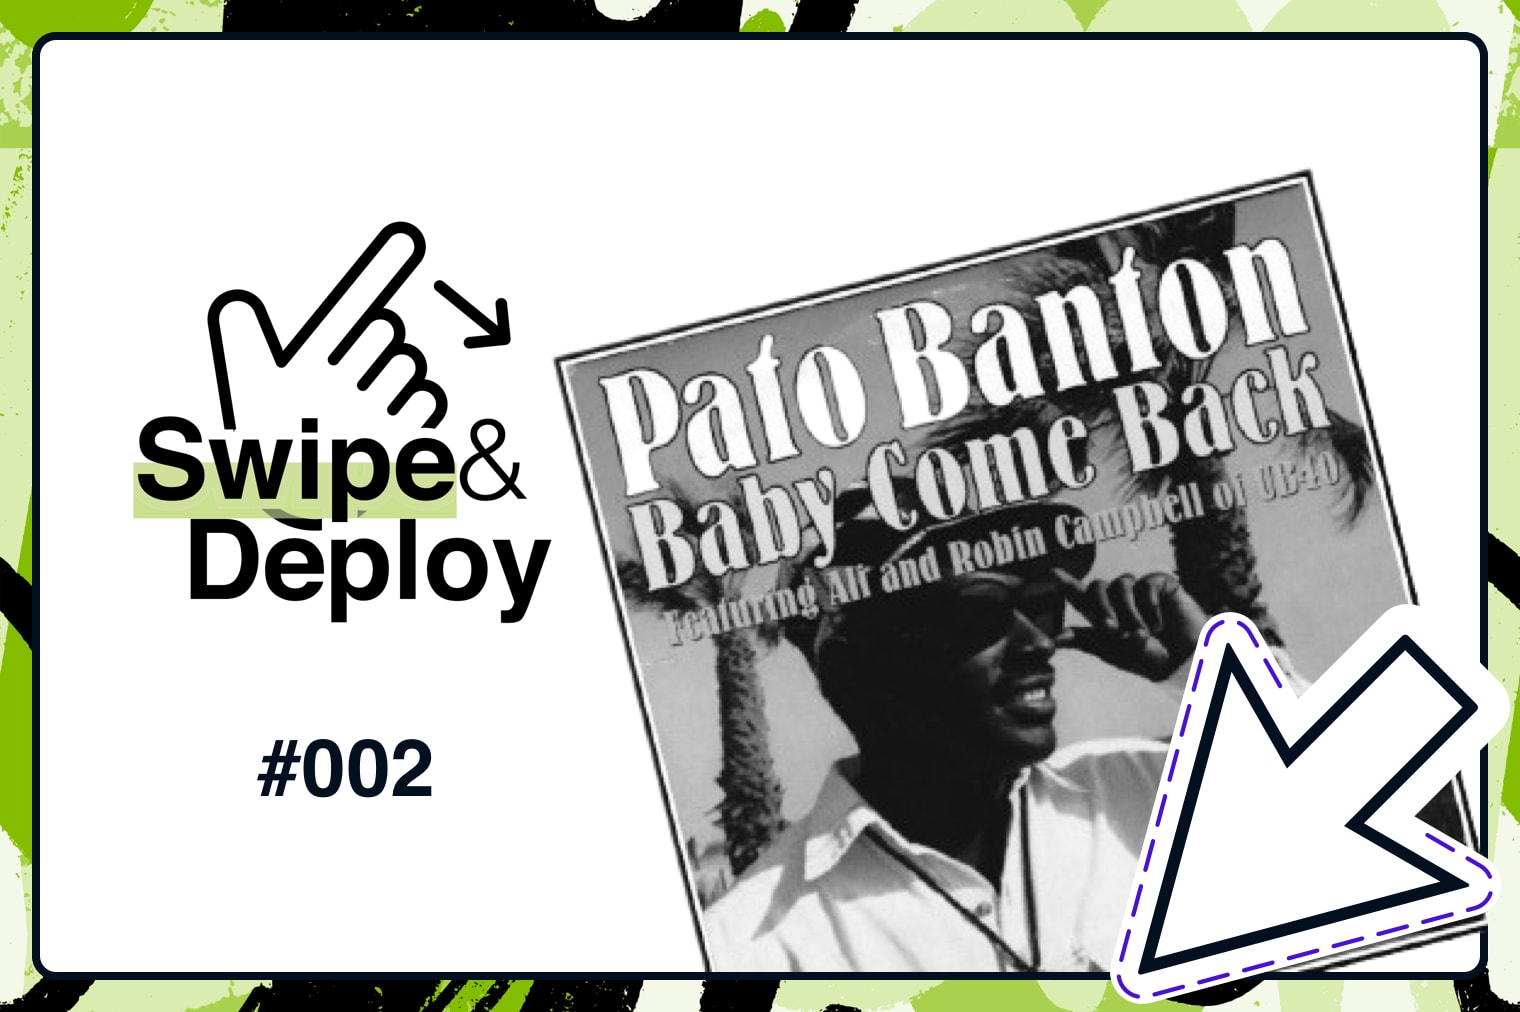 Swipe & Deploy 21 blog hero image of a Pato Banton CD cover.